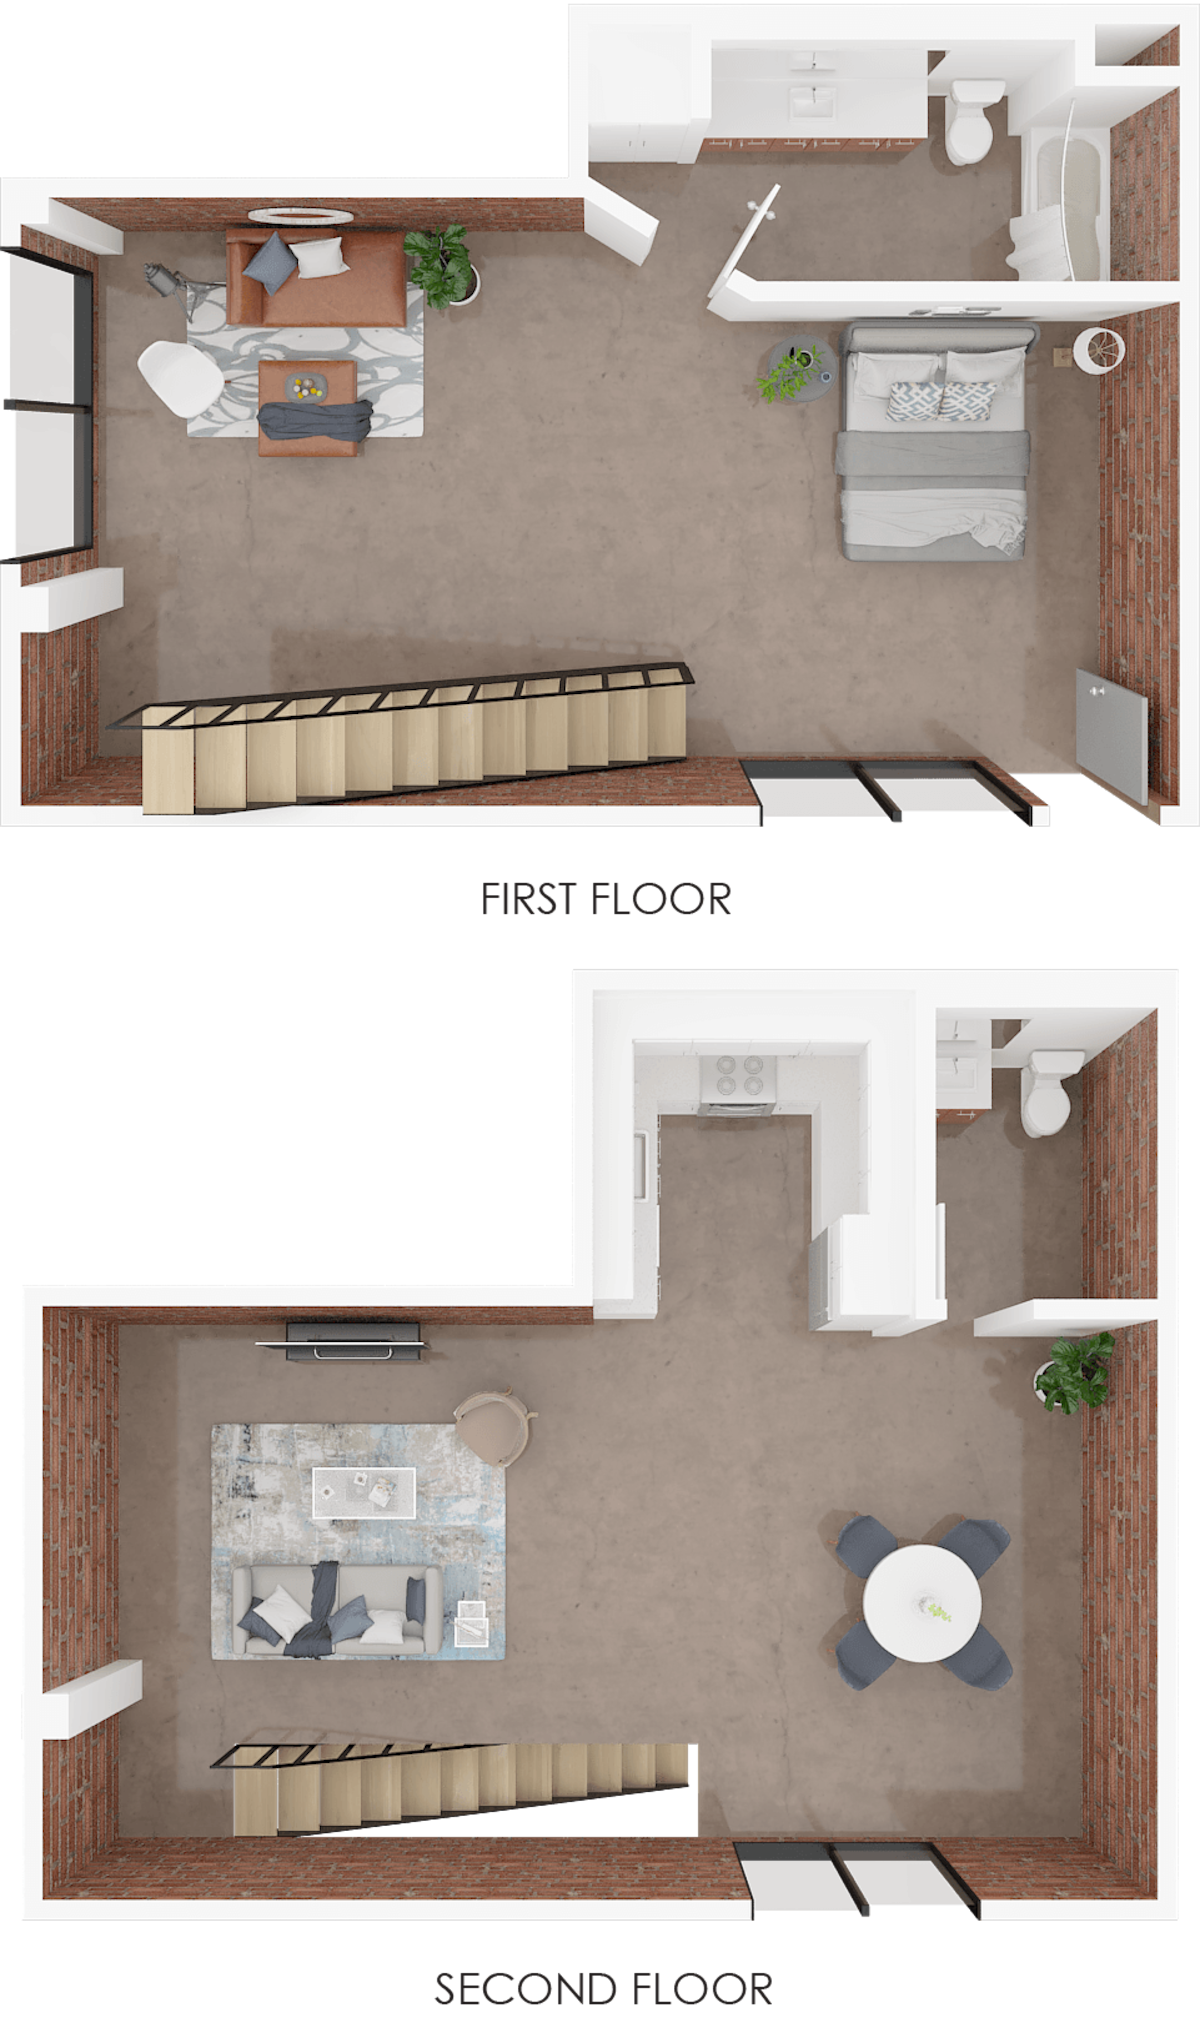 Floorplan diagram for Loft B, showing Studio